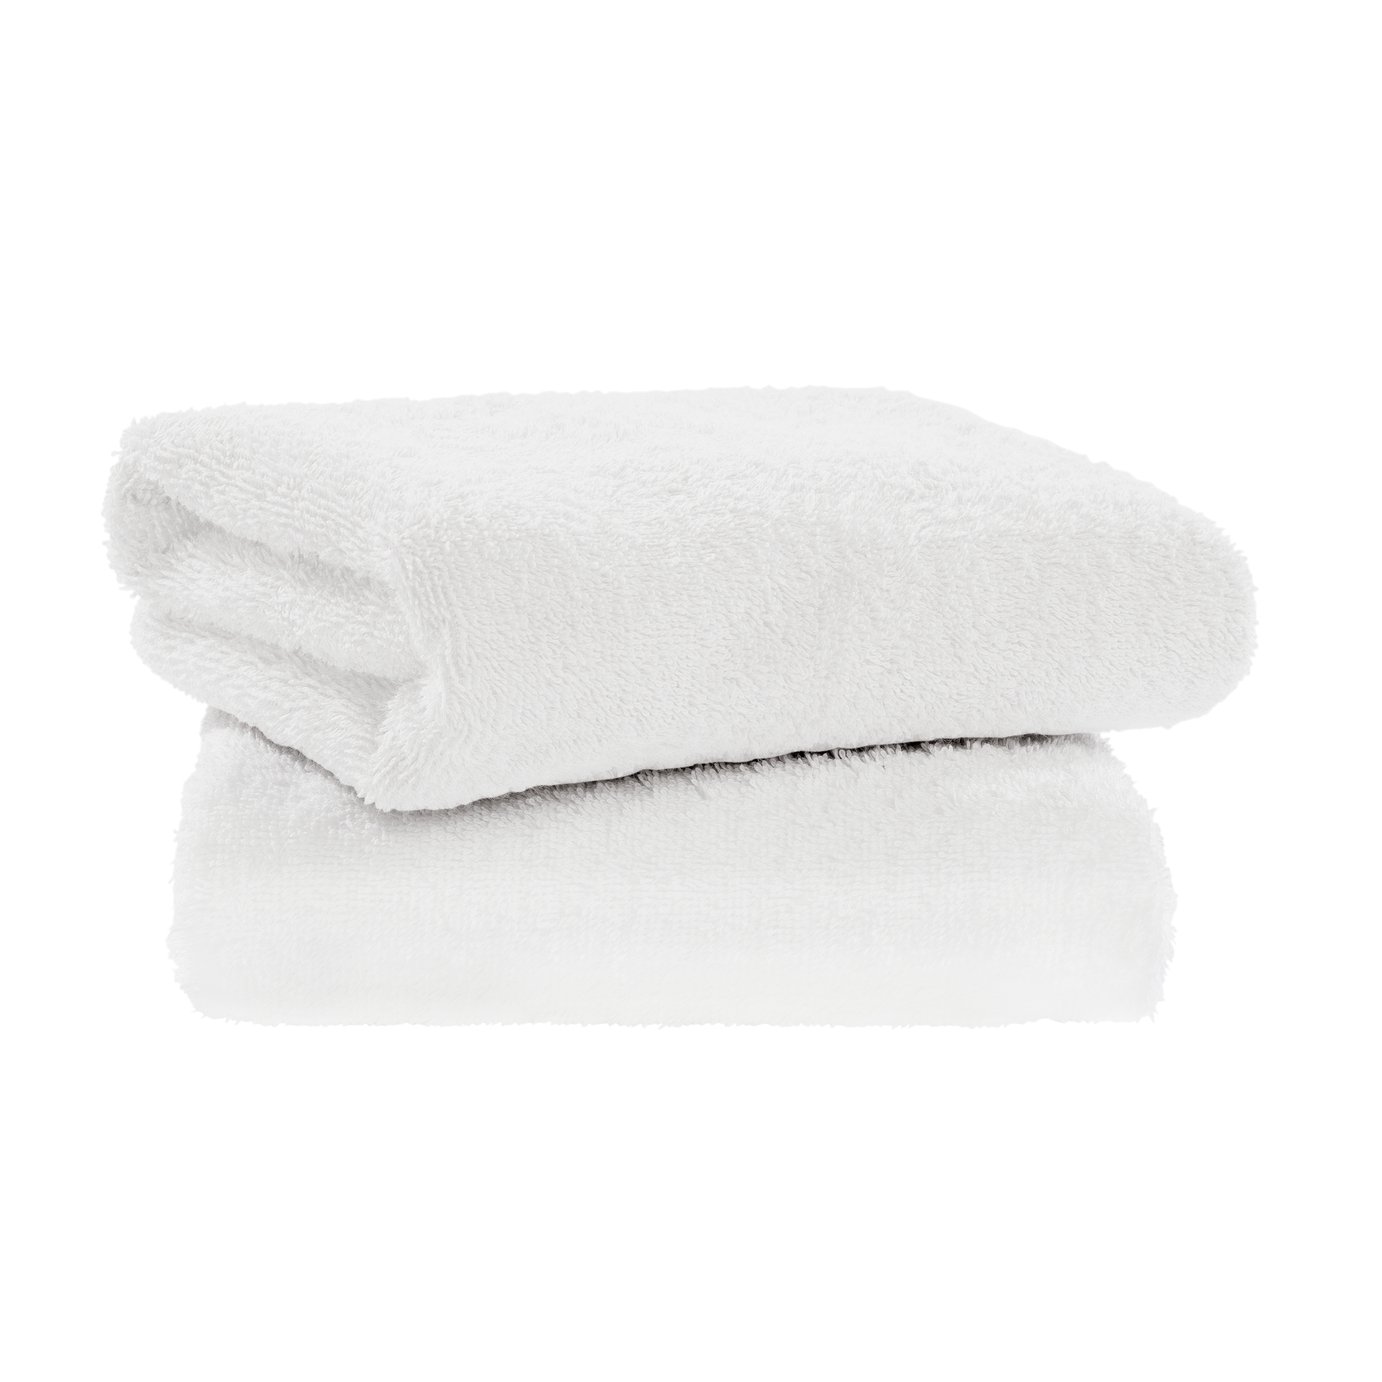 Argos Home Plain 2 Pack Hand Towels - Super White